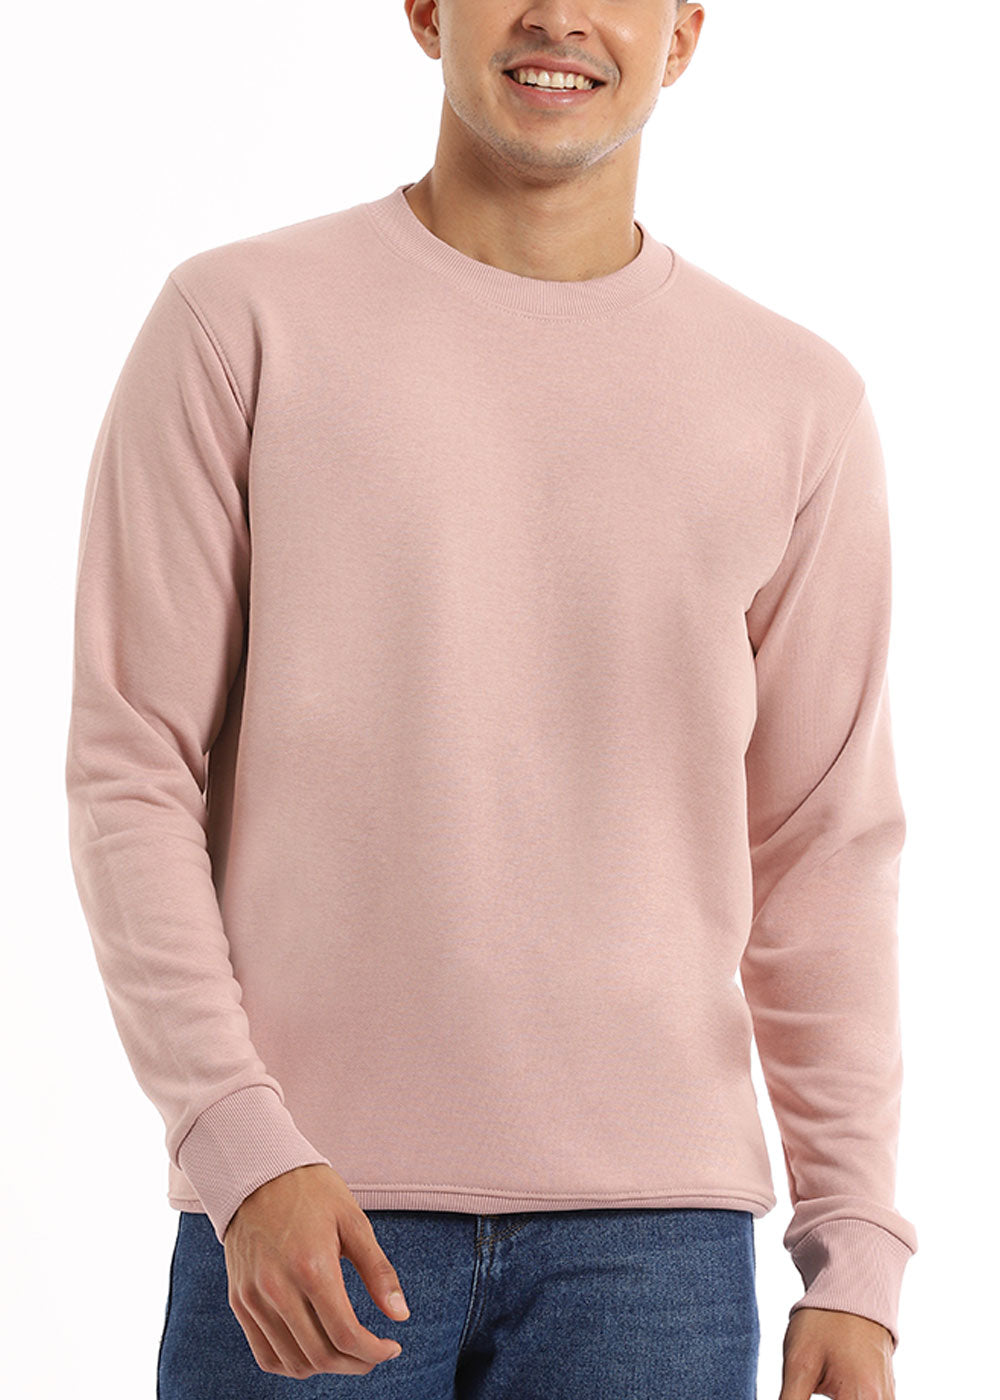 Baby Pink Sweatshirt